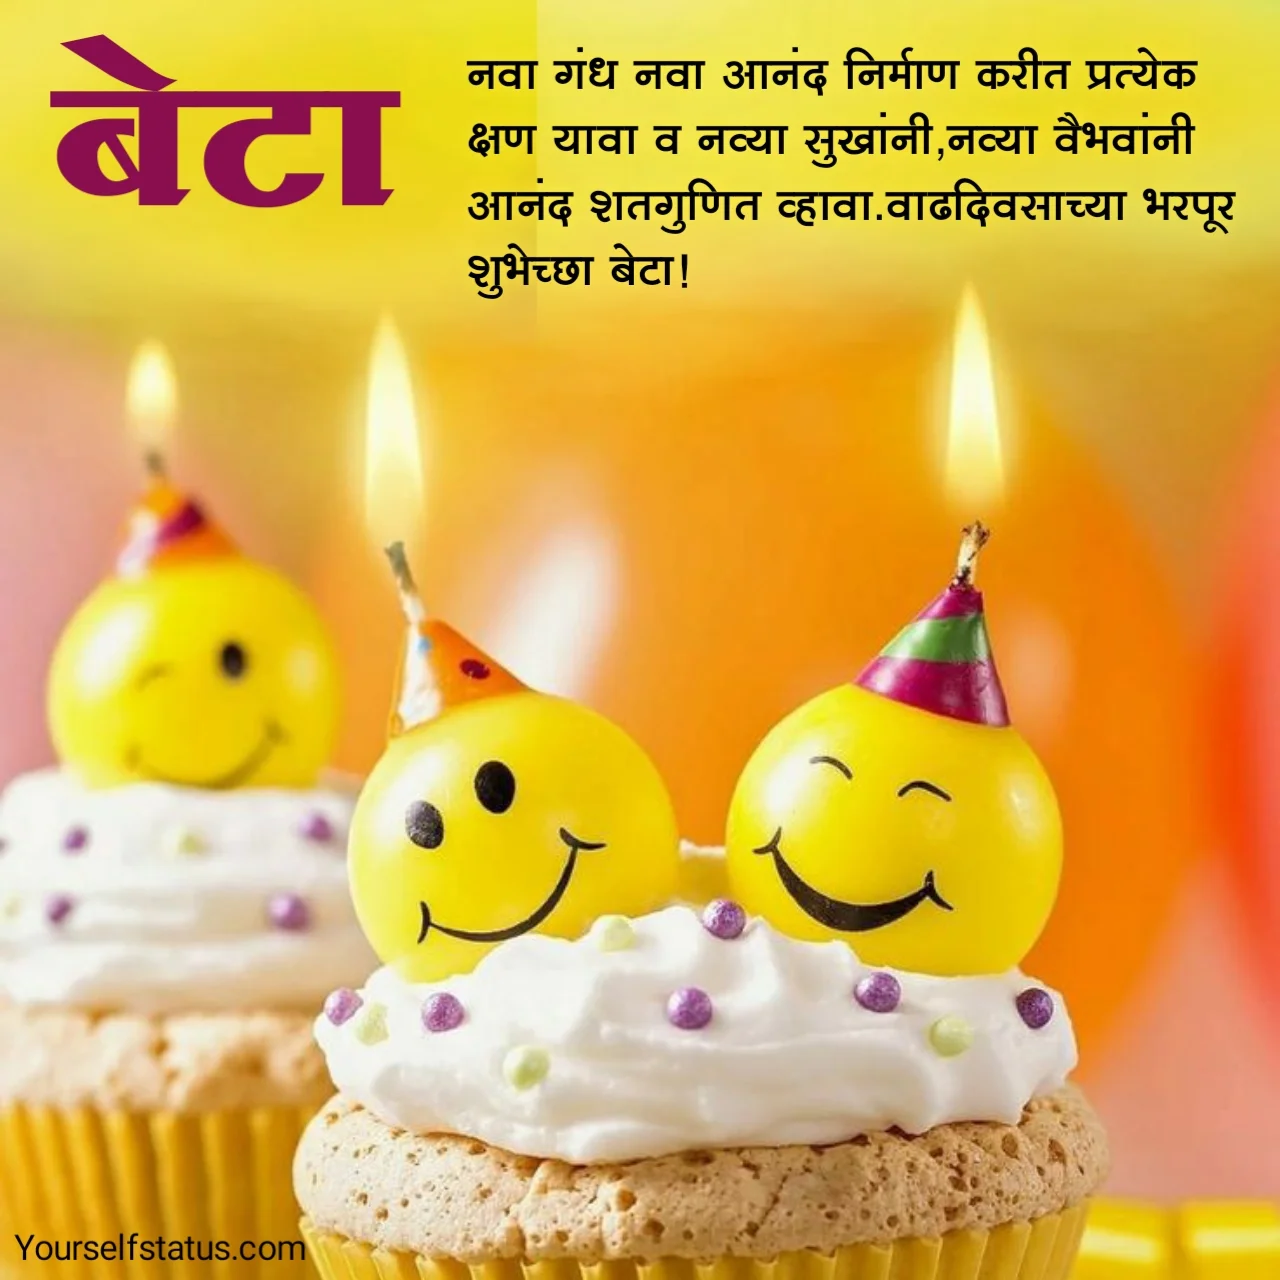 Happy Birthday wishes for son in marathi